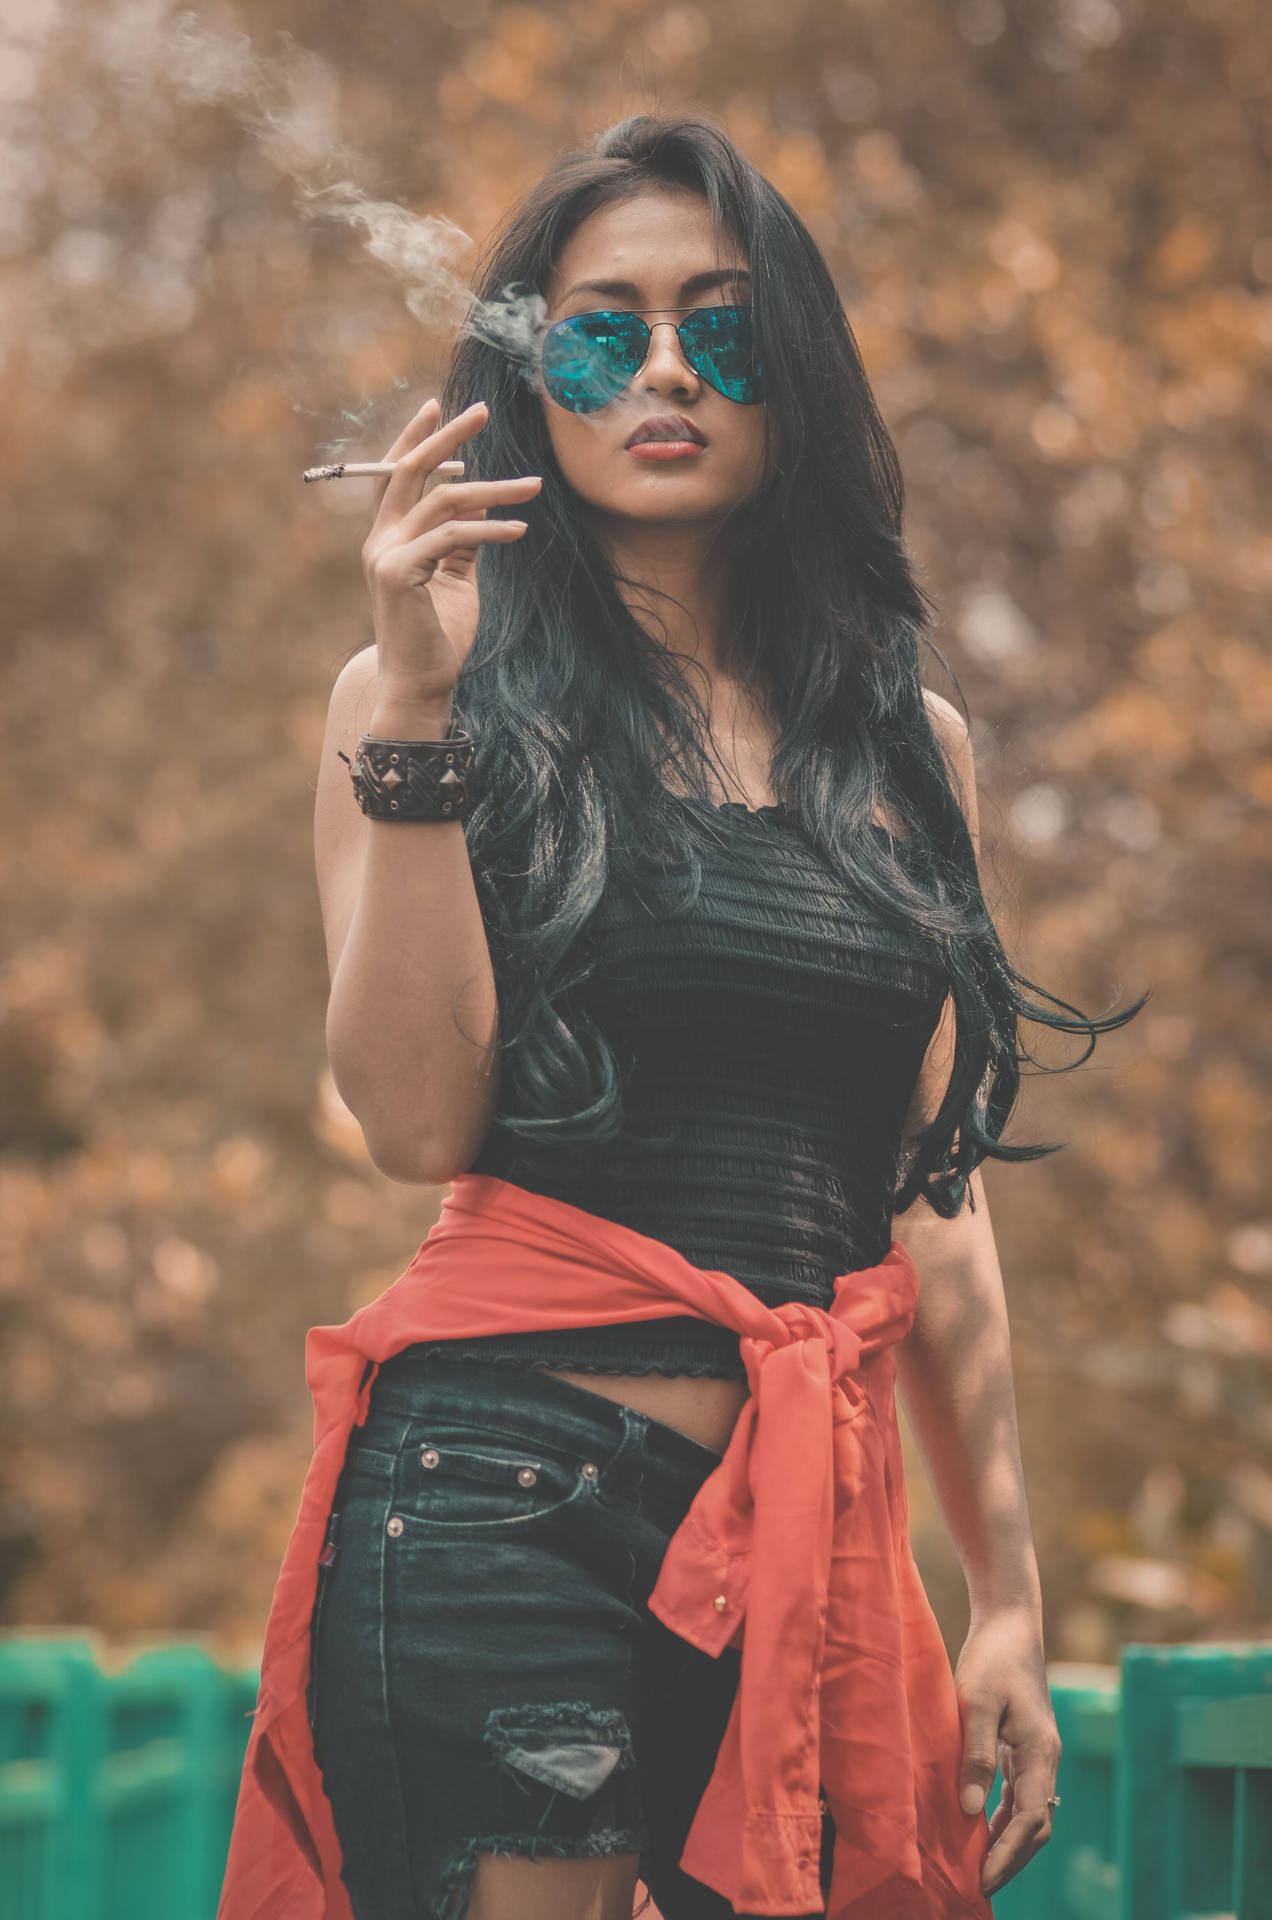 Cool Attitude Girl Smoking And Wearing Sunglasses Wallpaper